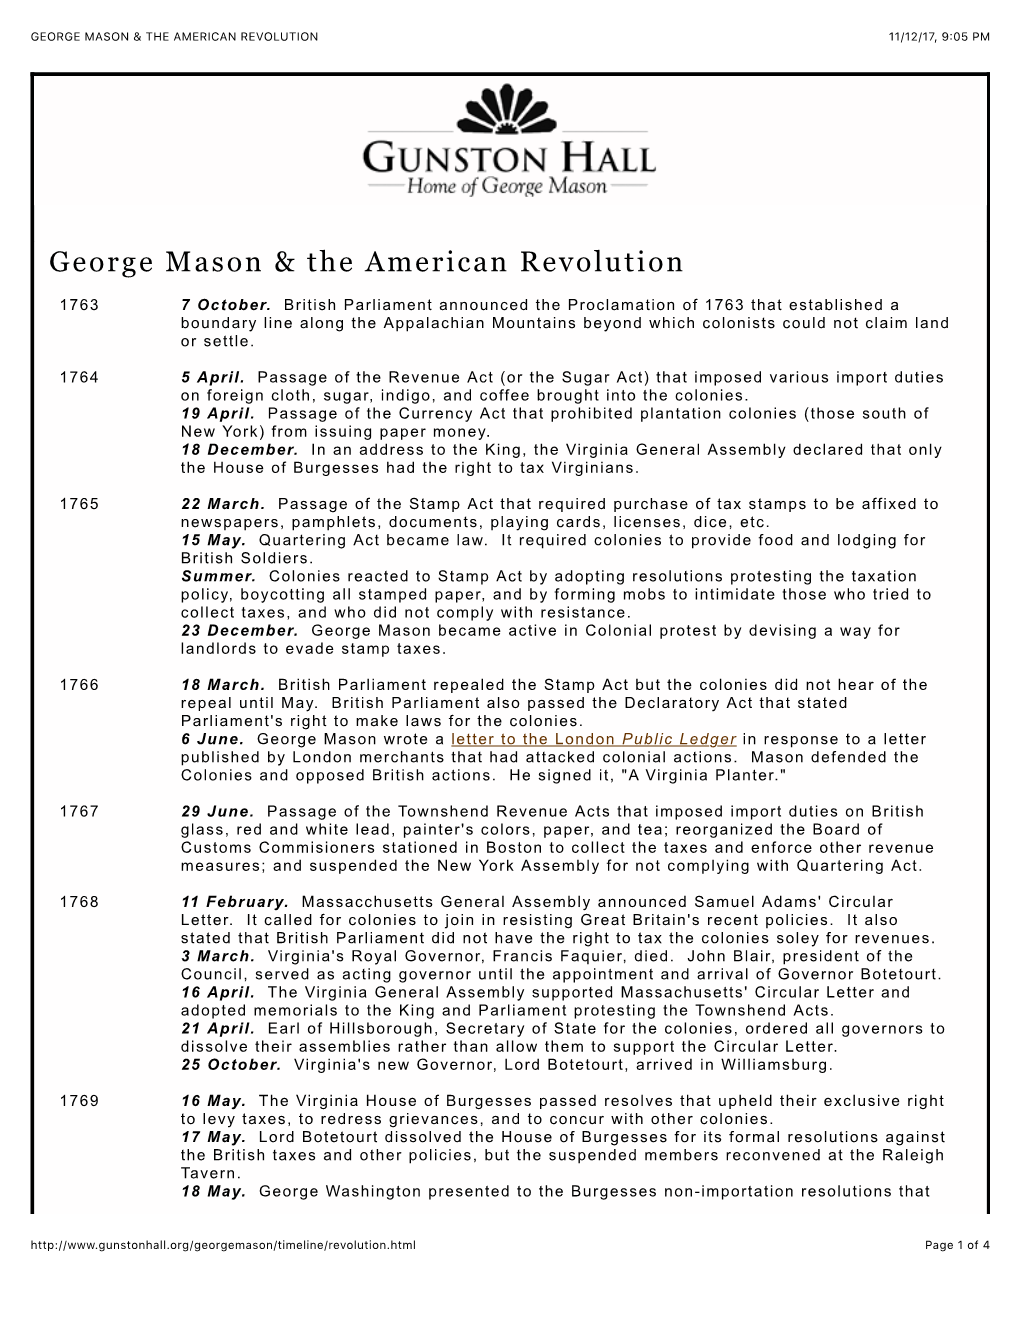 George Mason & the American Revolution